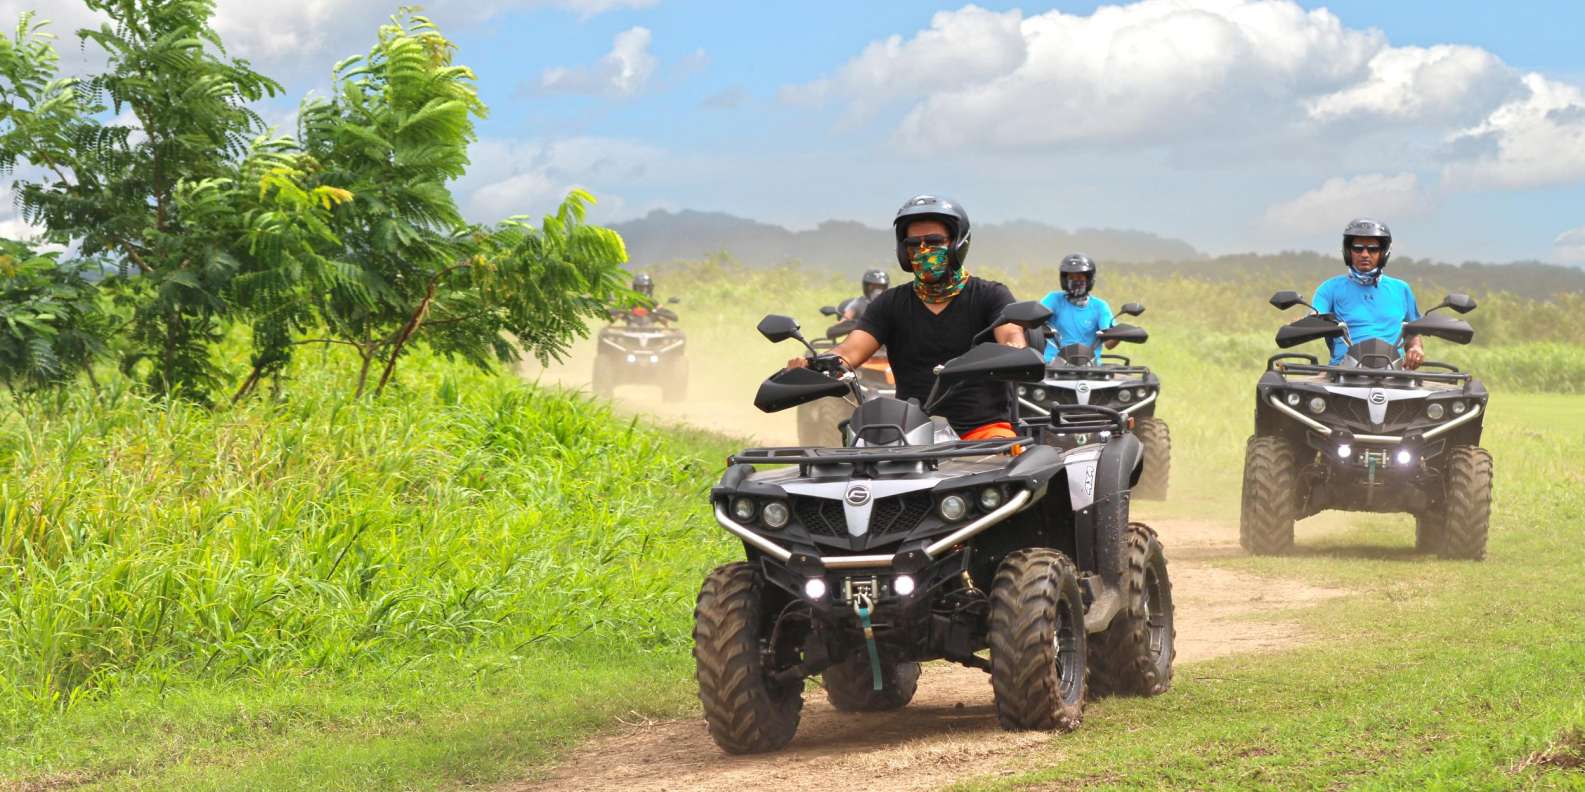  From San Juan: 2-Hour ATV Adventure at Campo Rico Ranch 